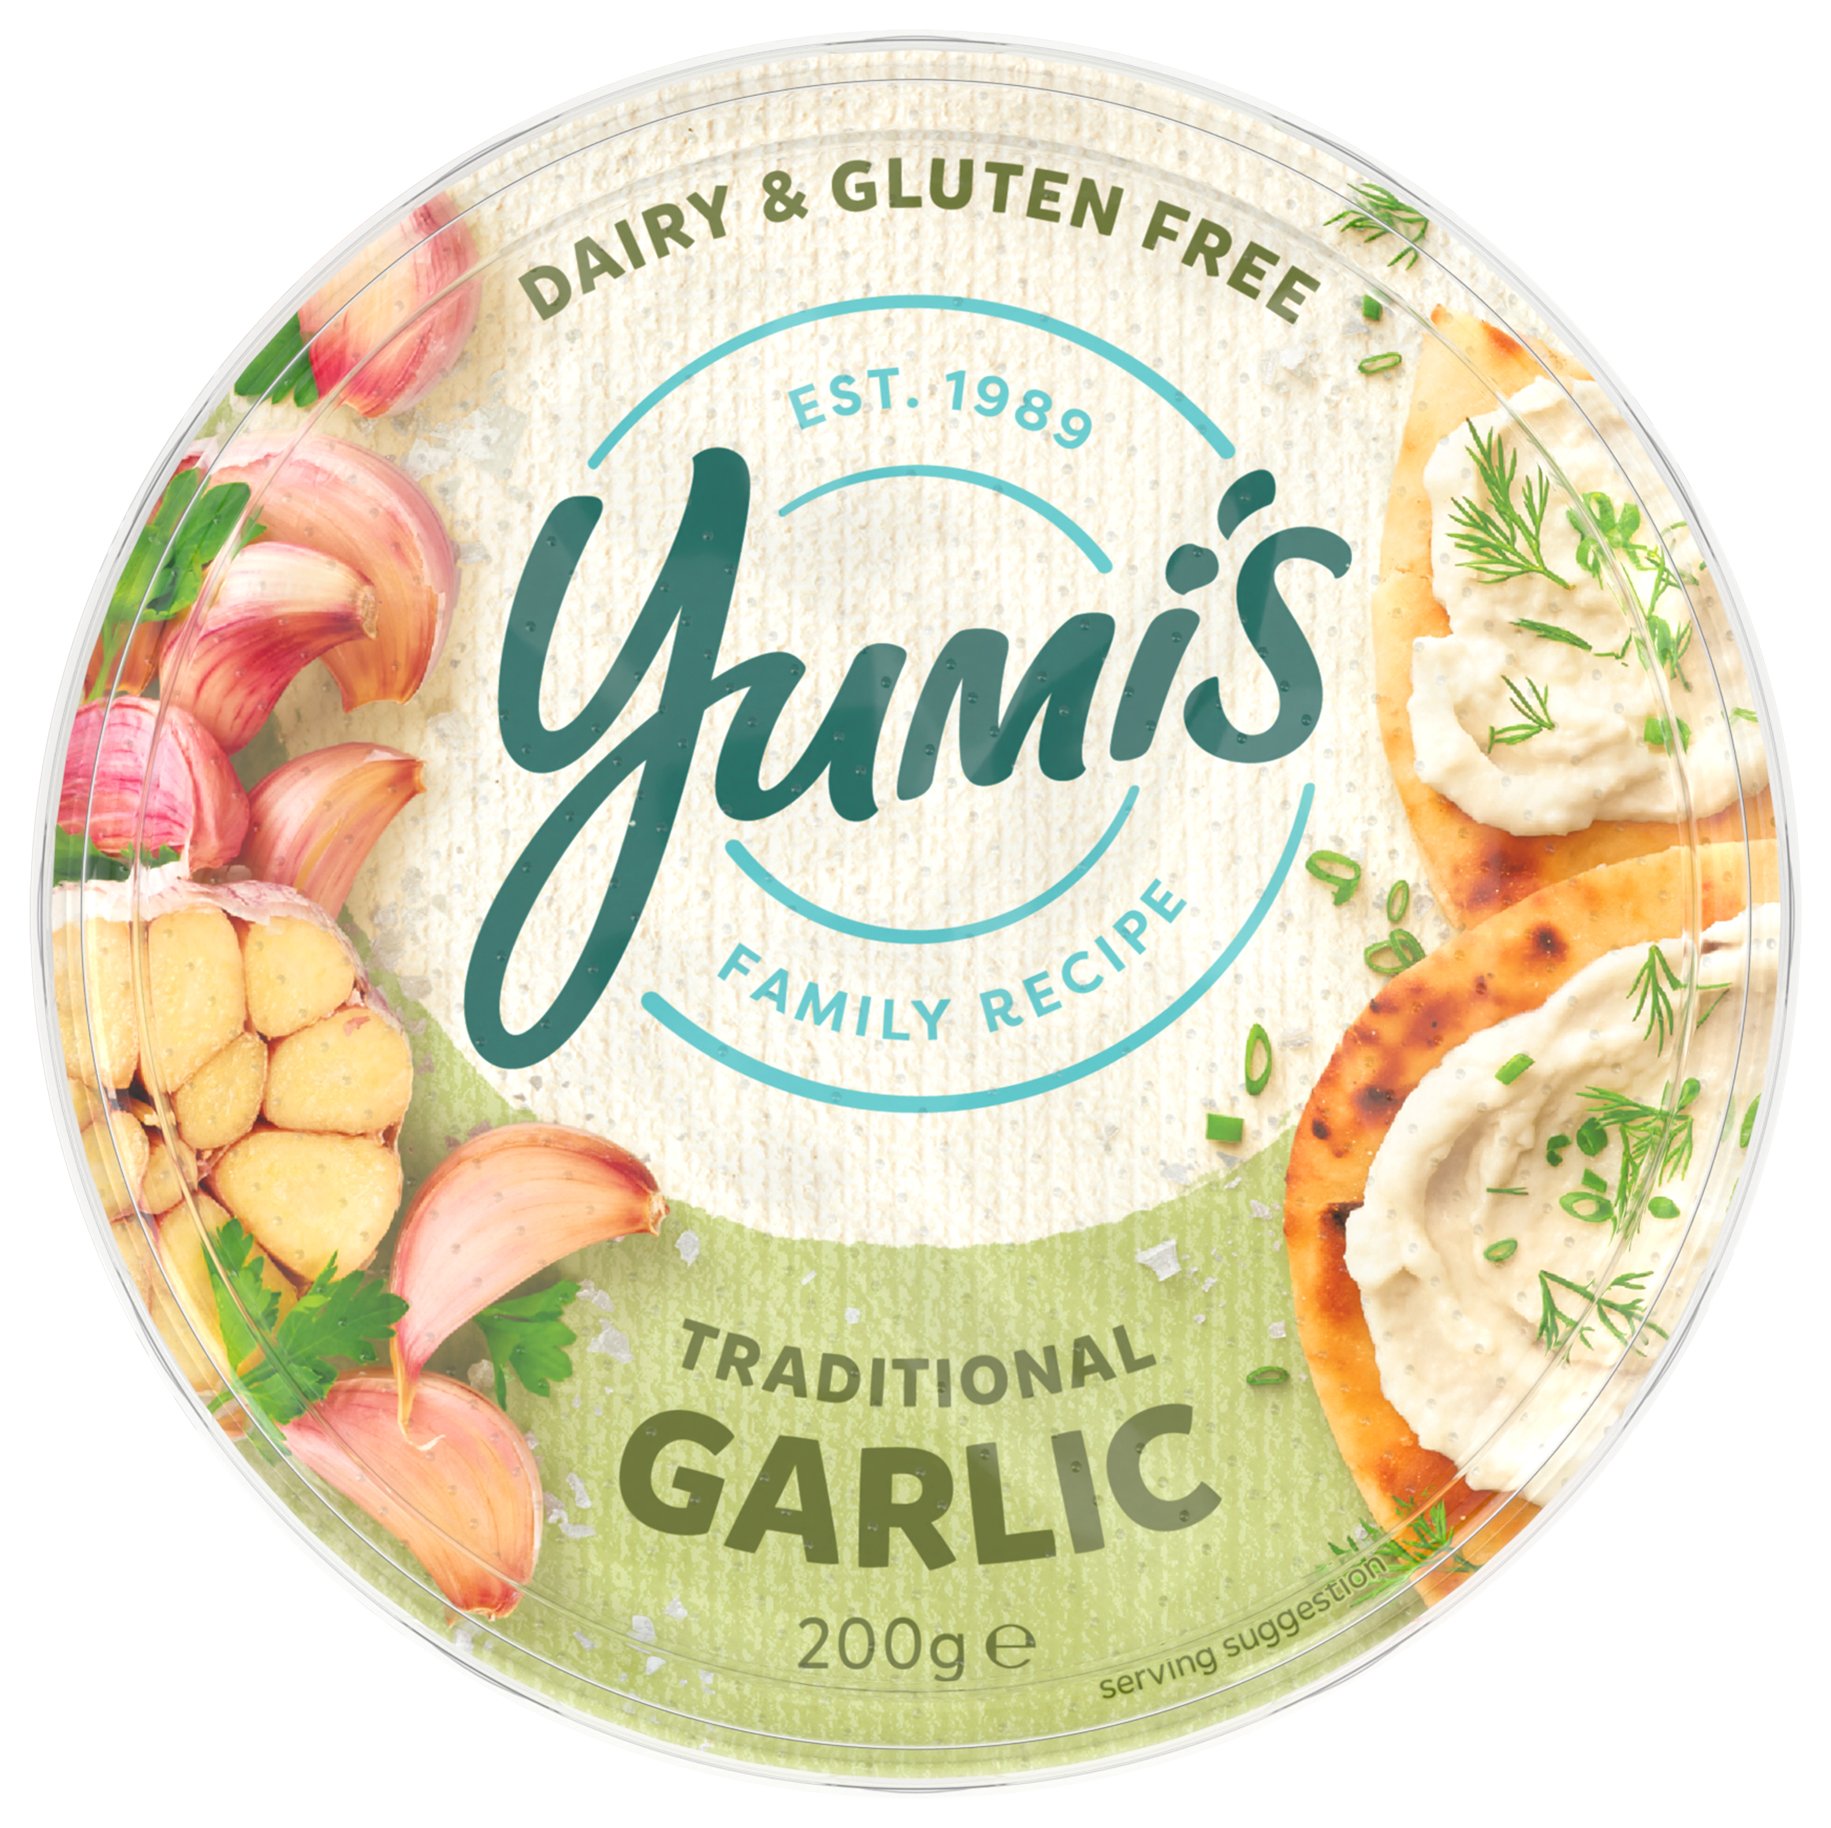 Yumis-200g-Top-Traditional-Garlic-LR.jpg